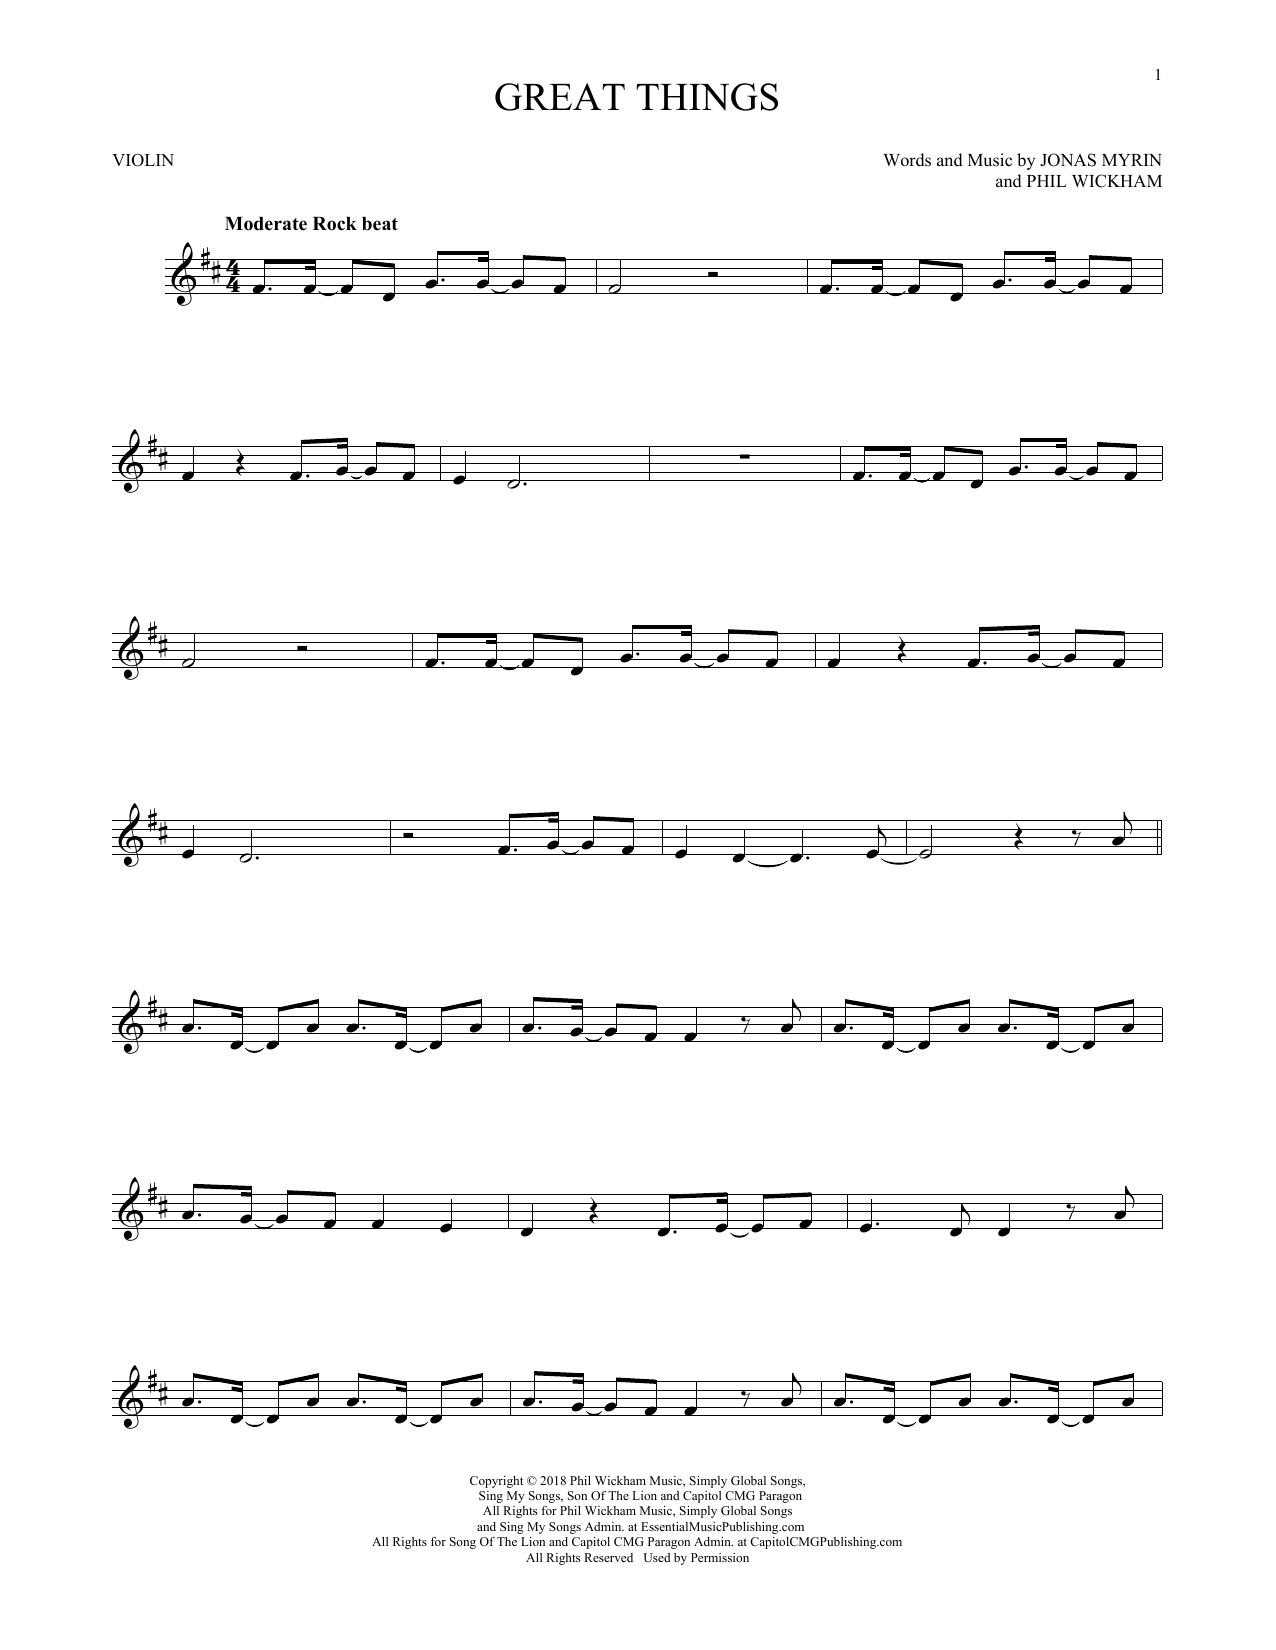 Phil Wickham Great Things sheet music notes printable PDF score